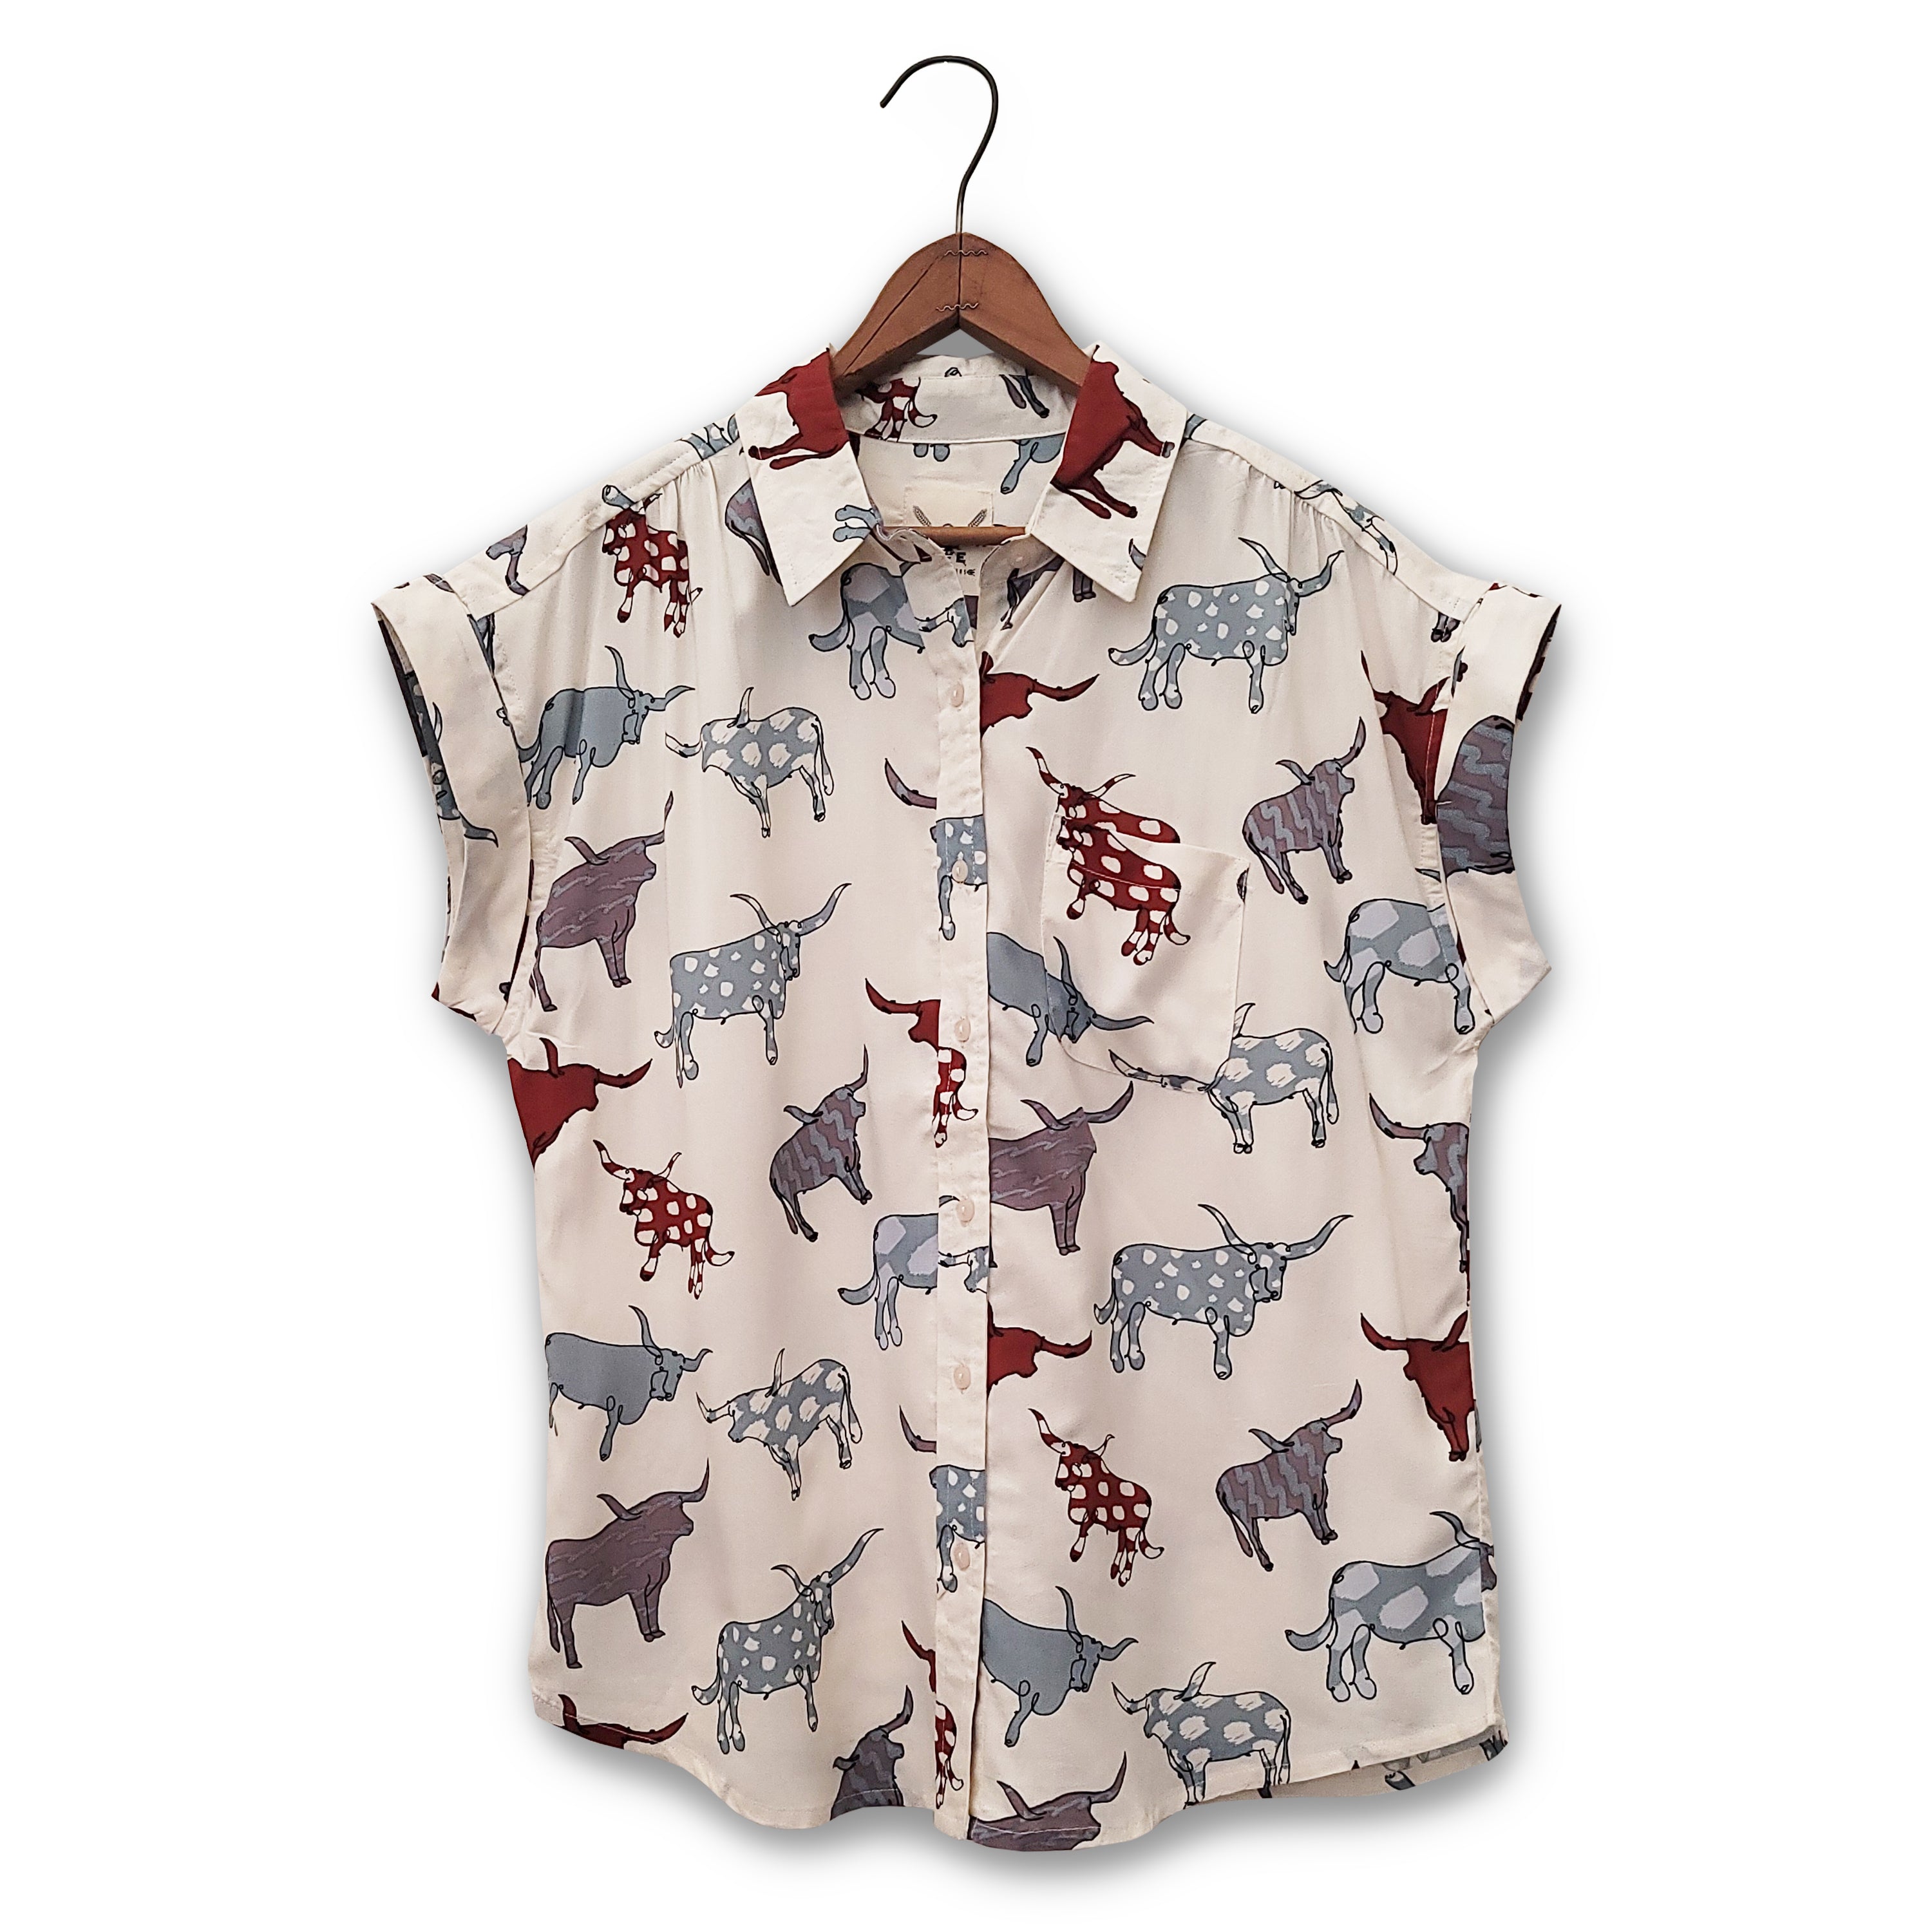 Arty Longhorn Print Shirt by Cotton & Rye #CRW713N